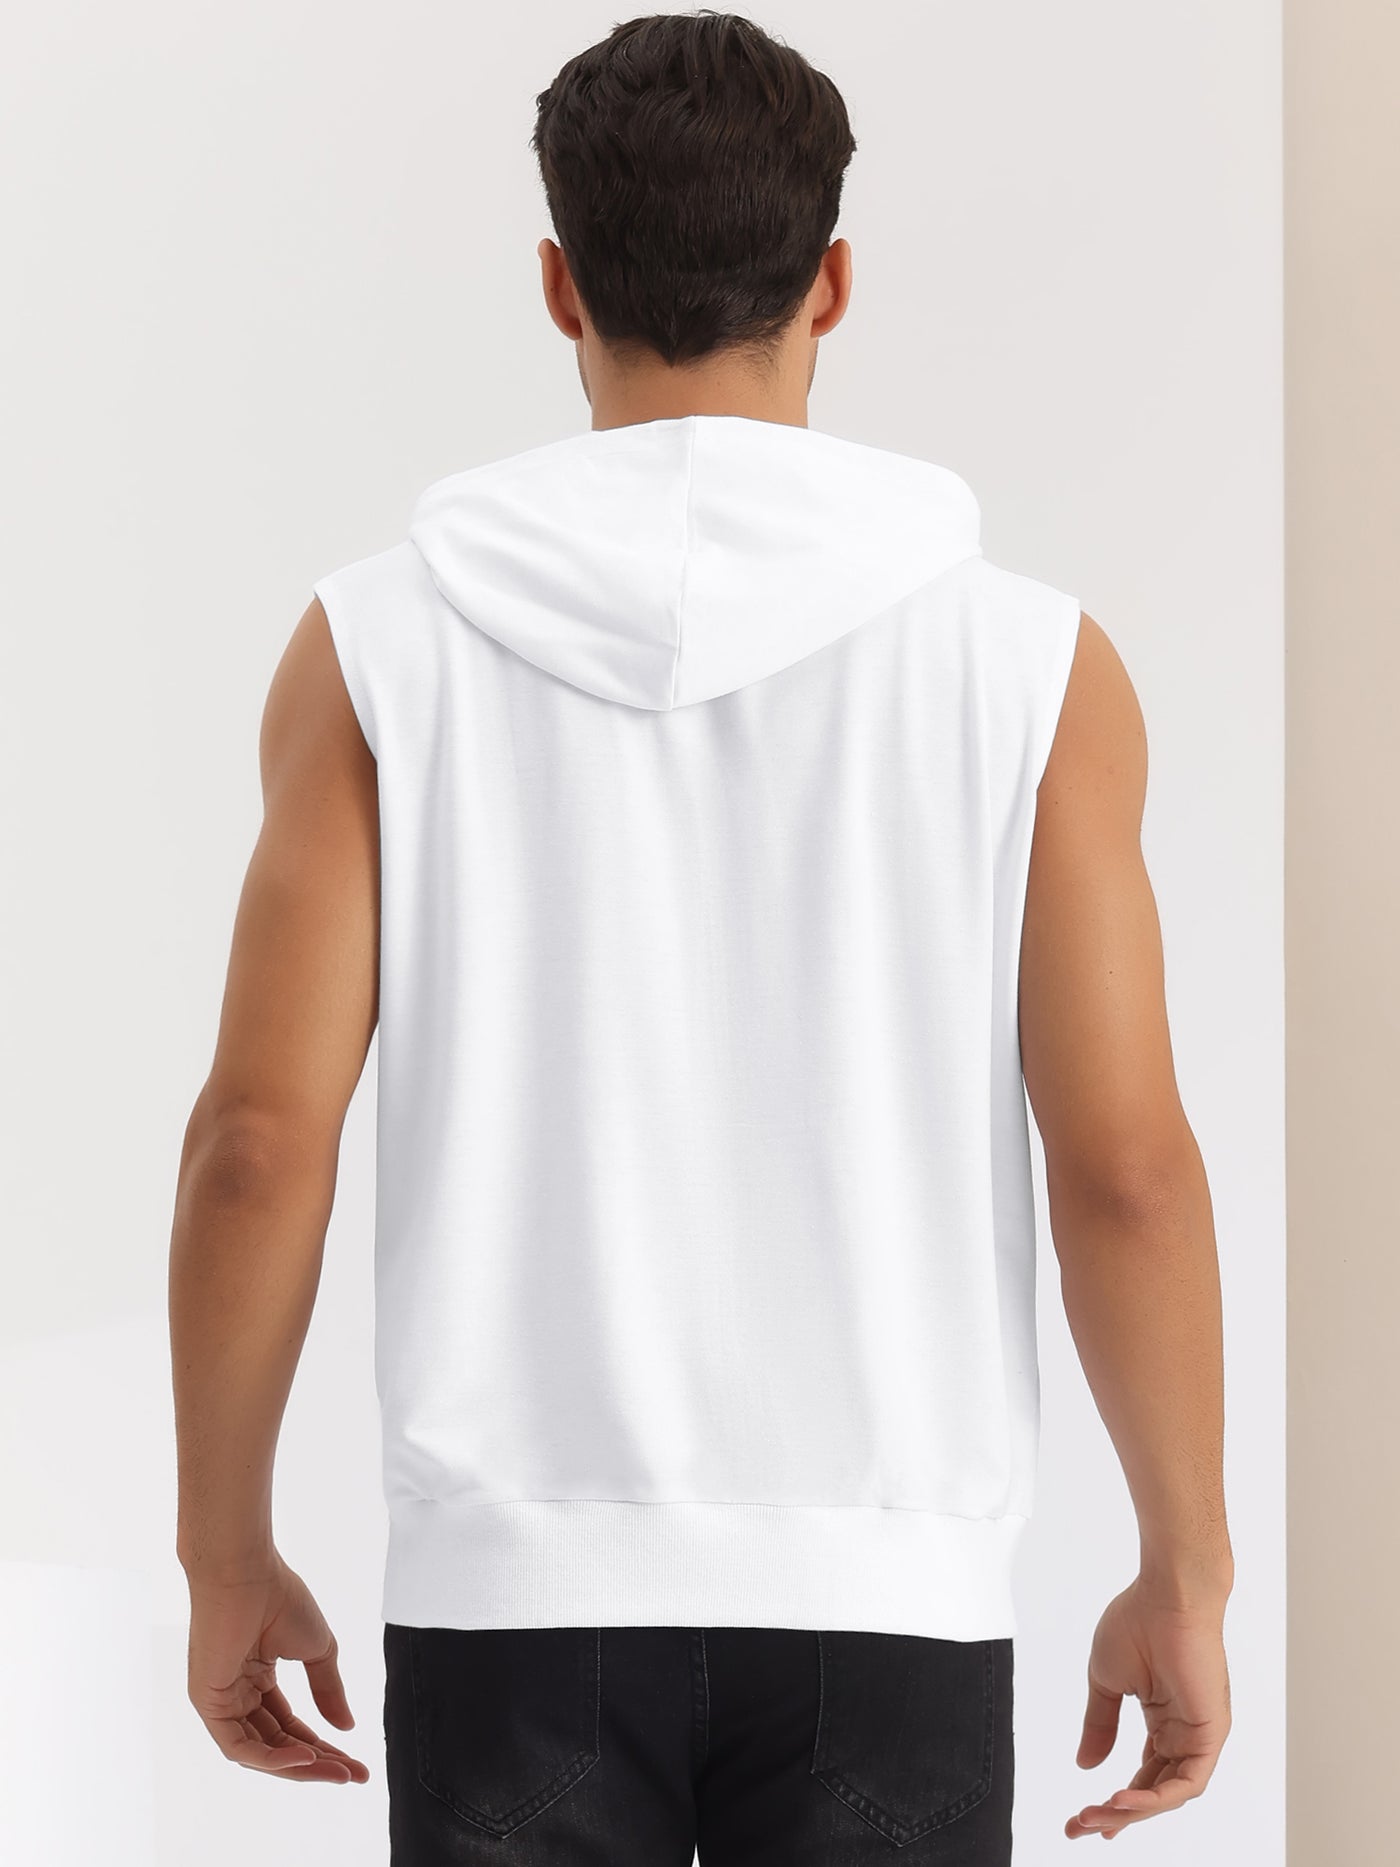 Bublédon Sleeveless Hoodie for Men's Zipper Drawstring Hooded Sweatshirt Vest